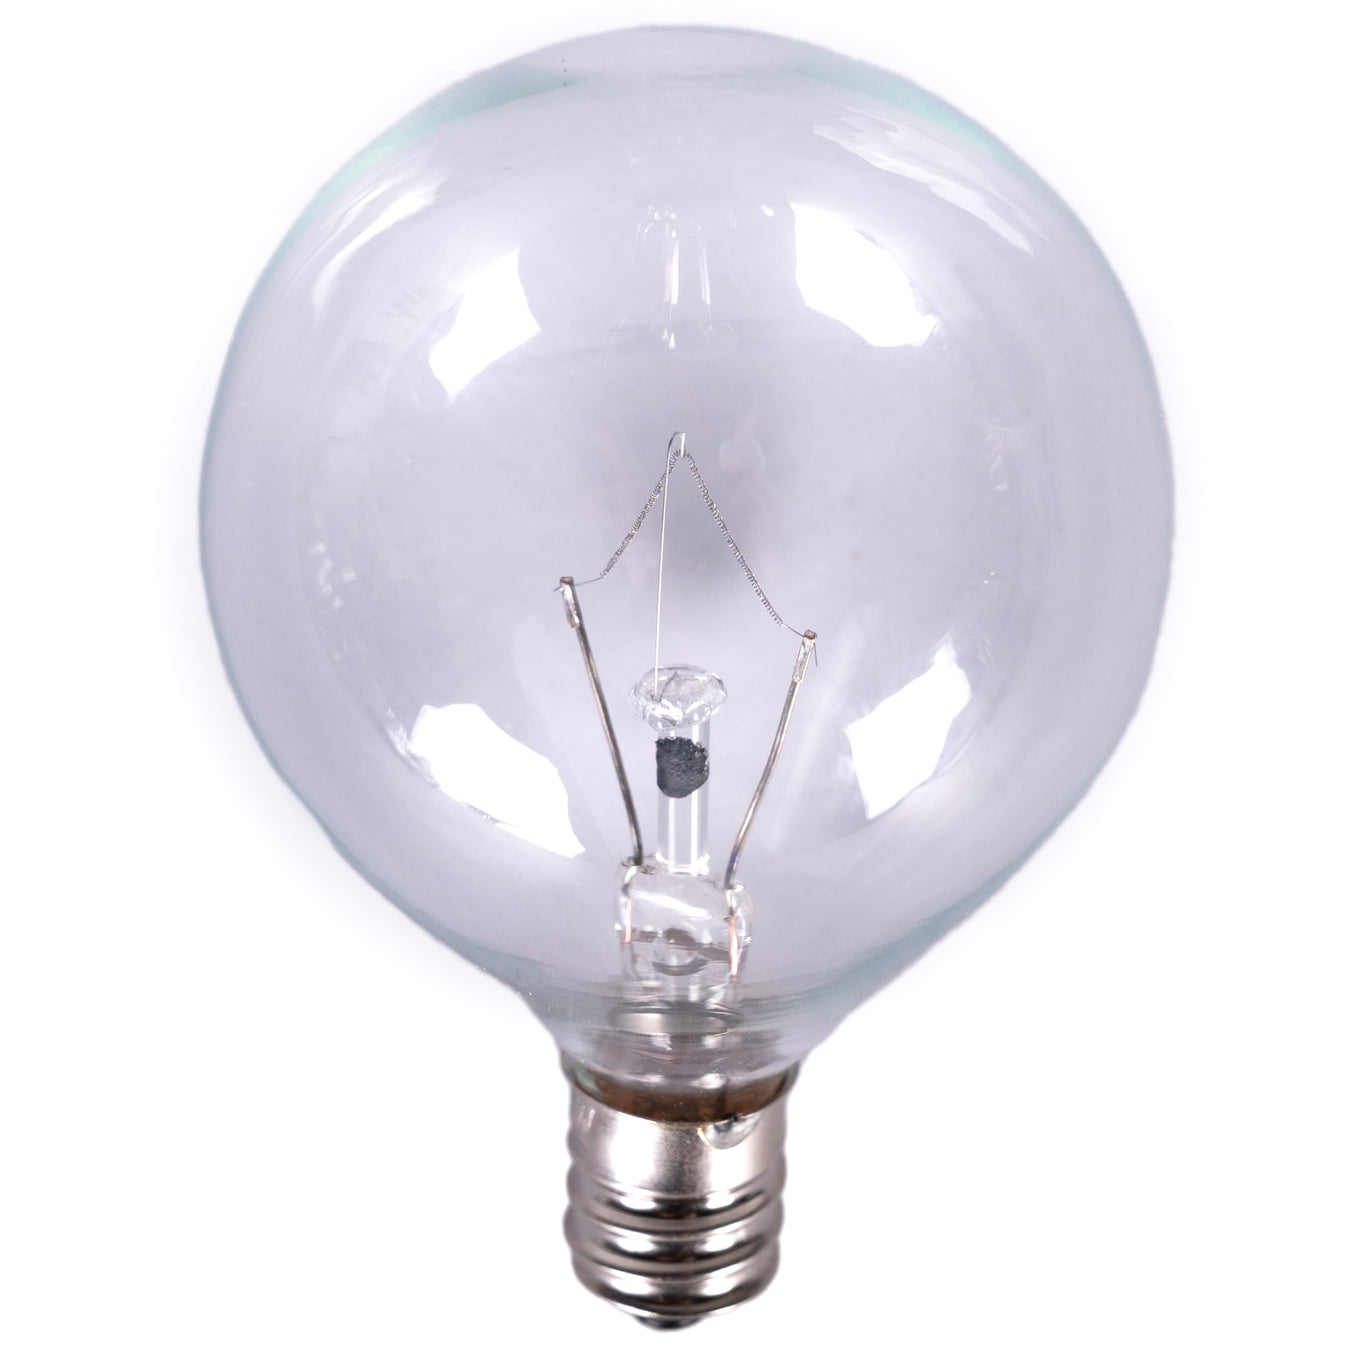 Wax Warmer Light Bulbs